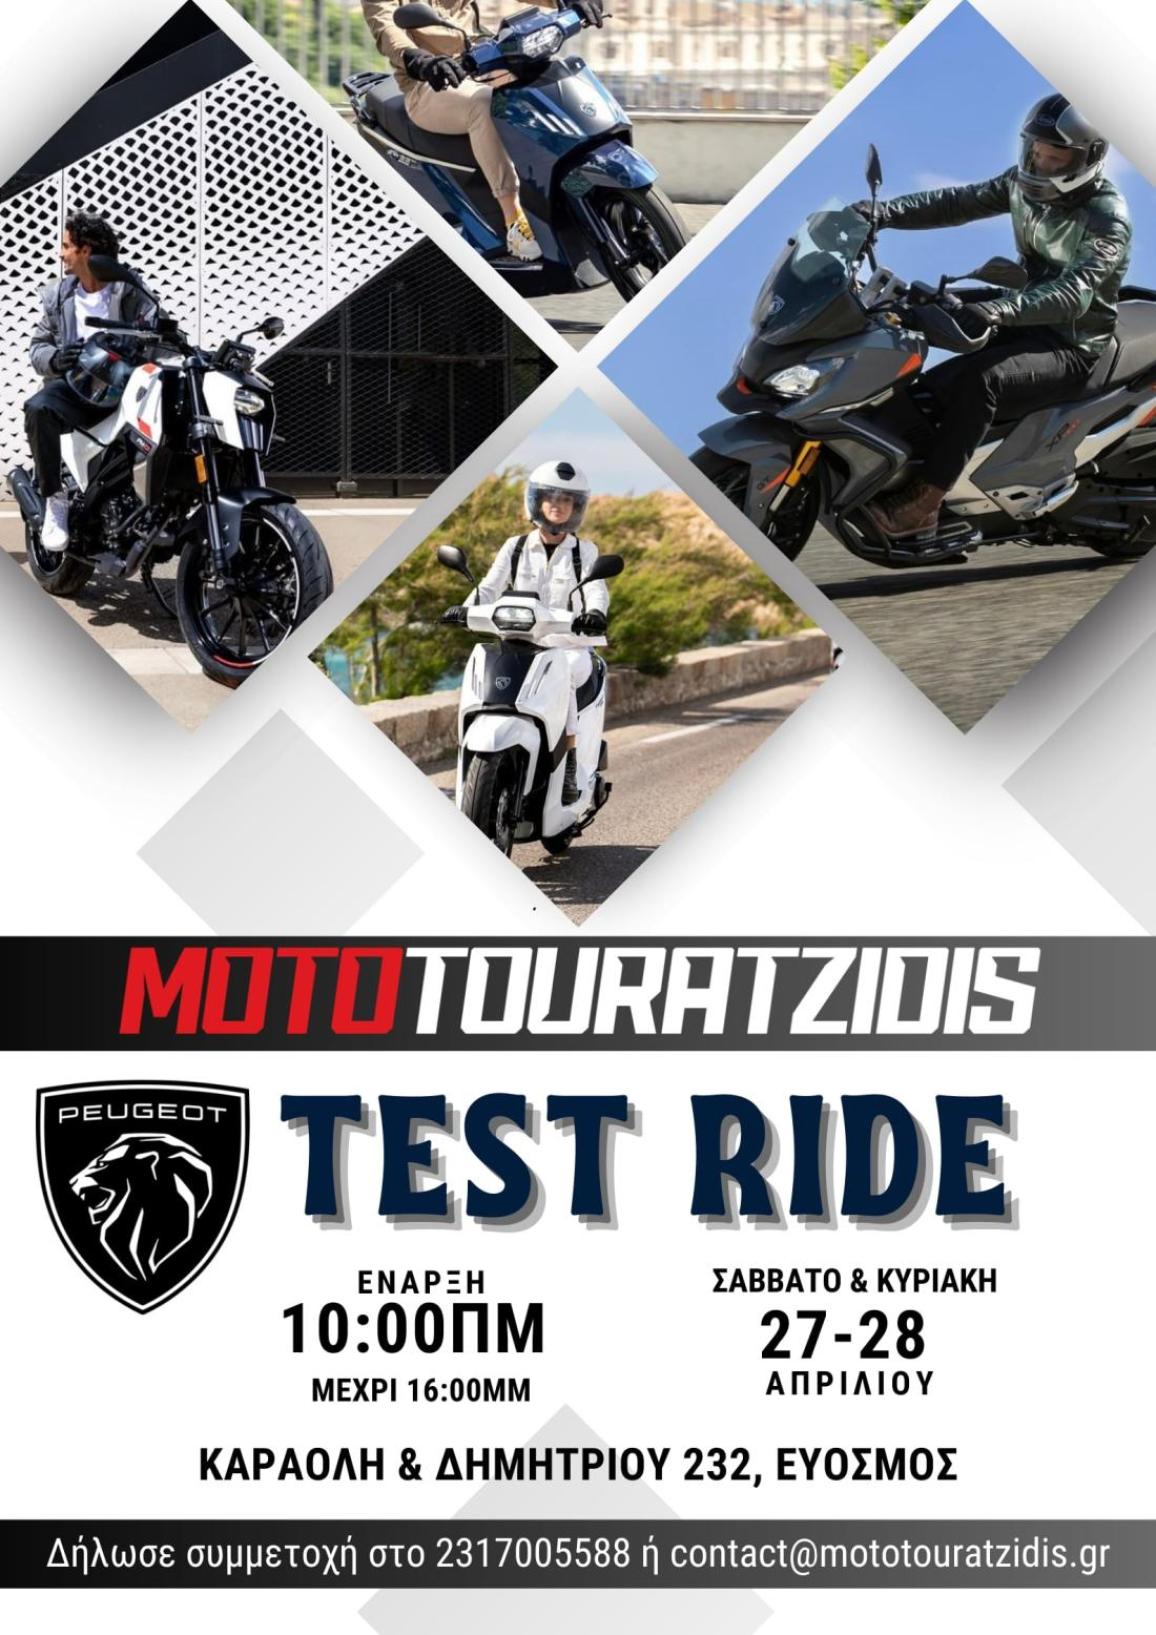 Peugeot Motocycles - Test Ride στην Θεσσαλονίκη στις 27 και 28 Απριλίου